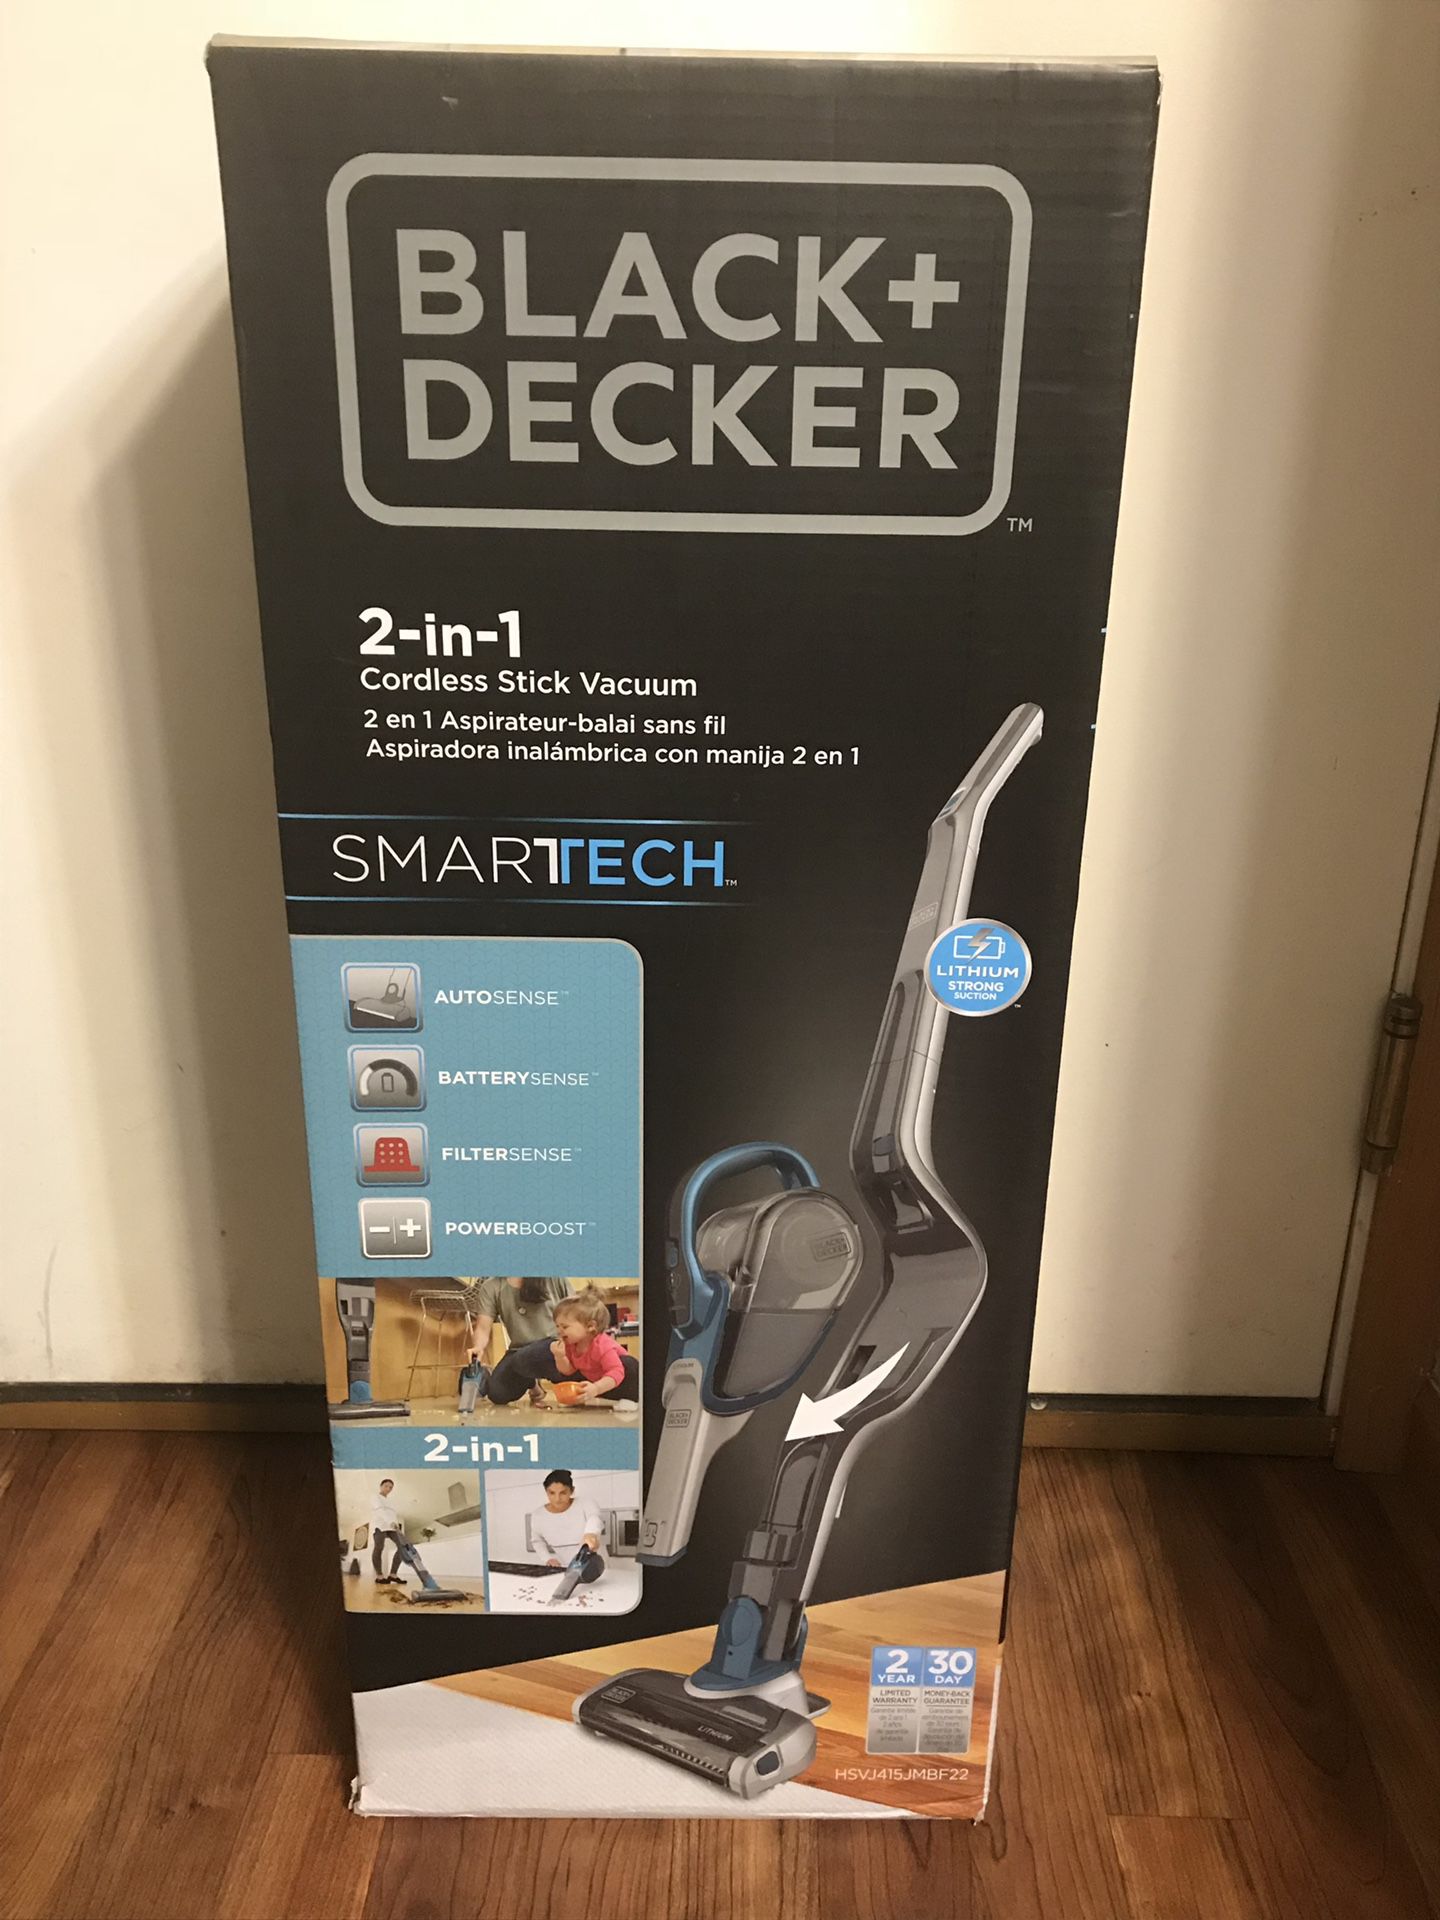 BLACK+DECKER Smartech Ocean Blue 2 in 1 Stick Vacuum Cleaner for sale  online